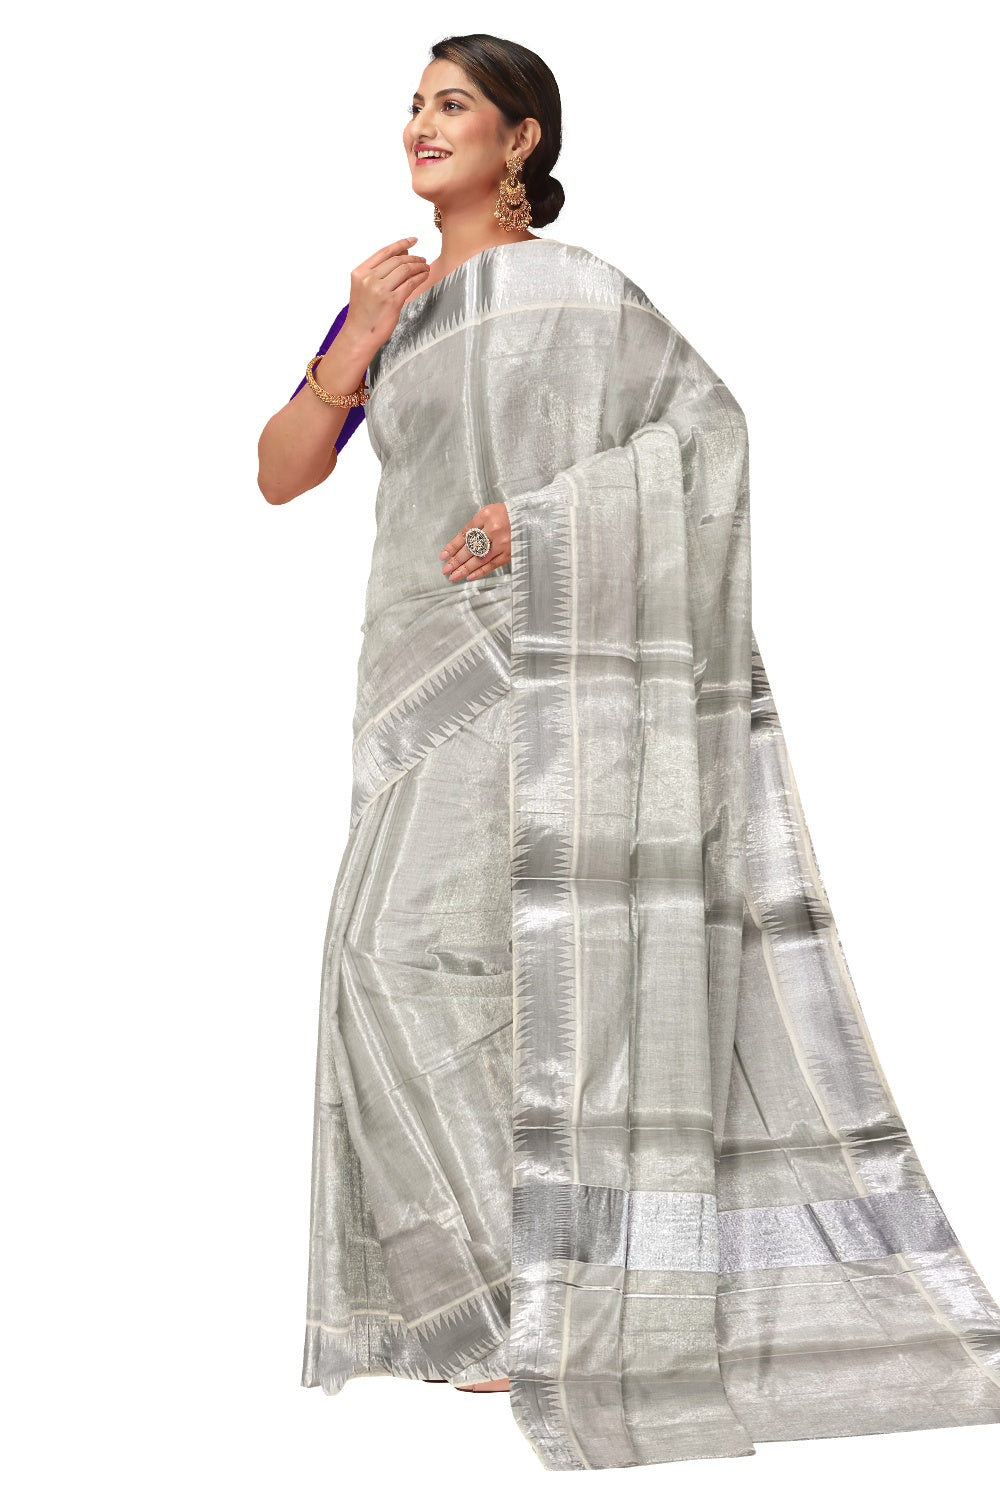 Kerala Plain Silver Tissue Kasavu Saree with 3 inch Designer Border